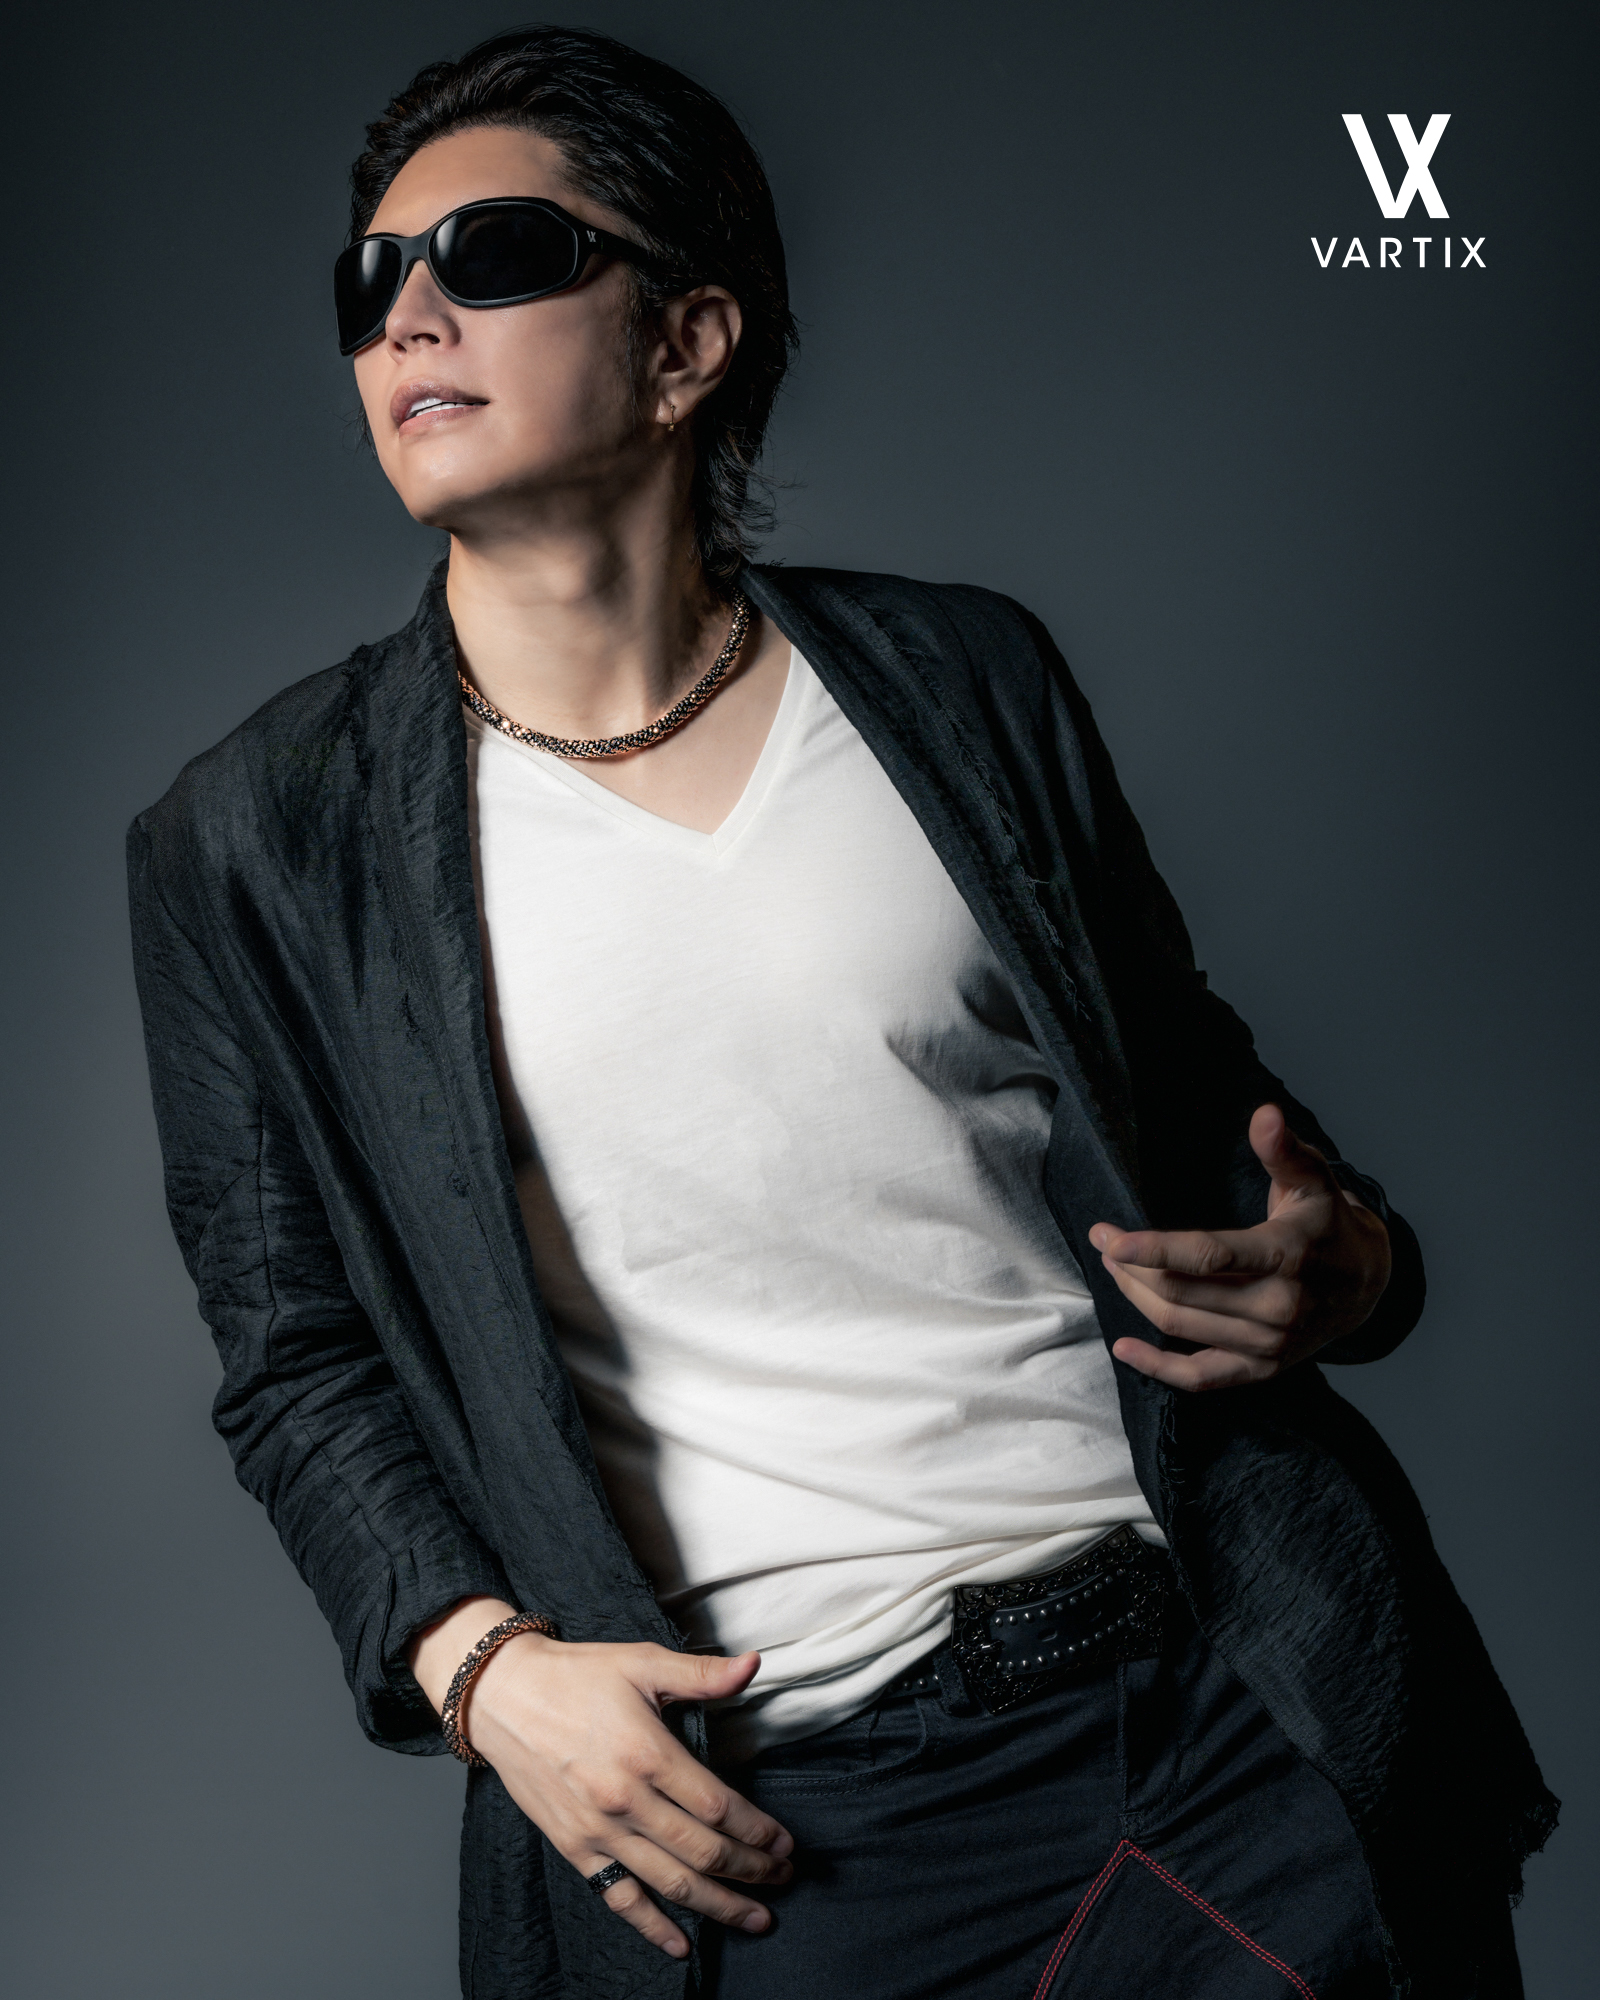 VARTIX 新作サングラス 新色「マットブラック」 の一般販売を2月14日